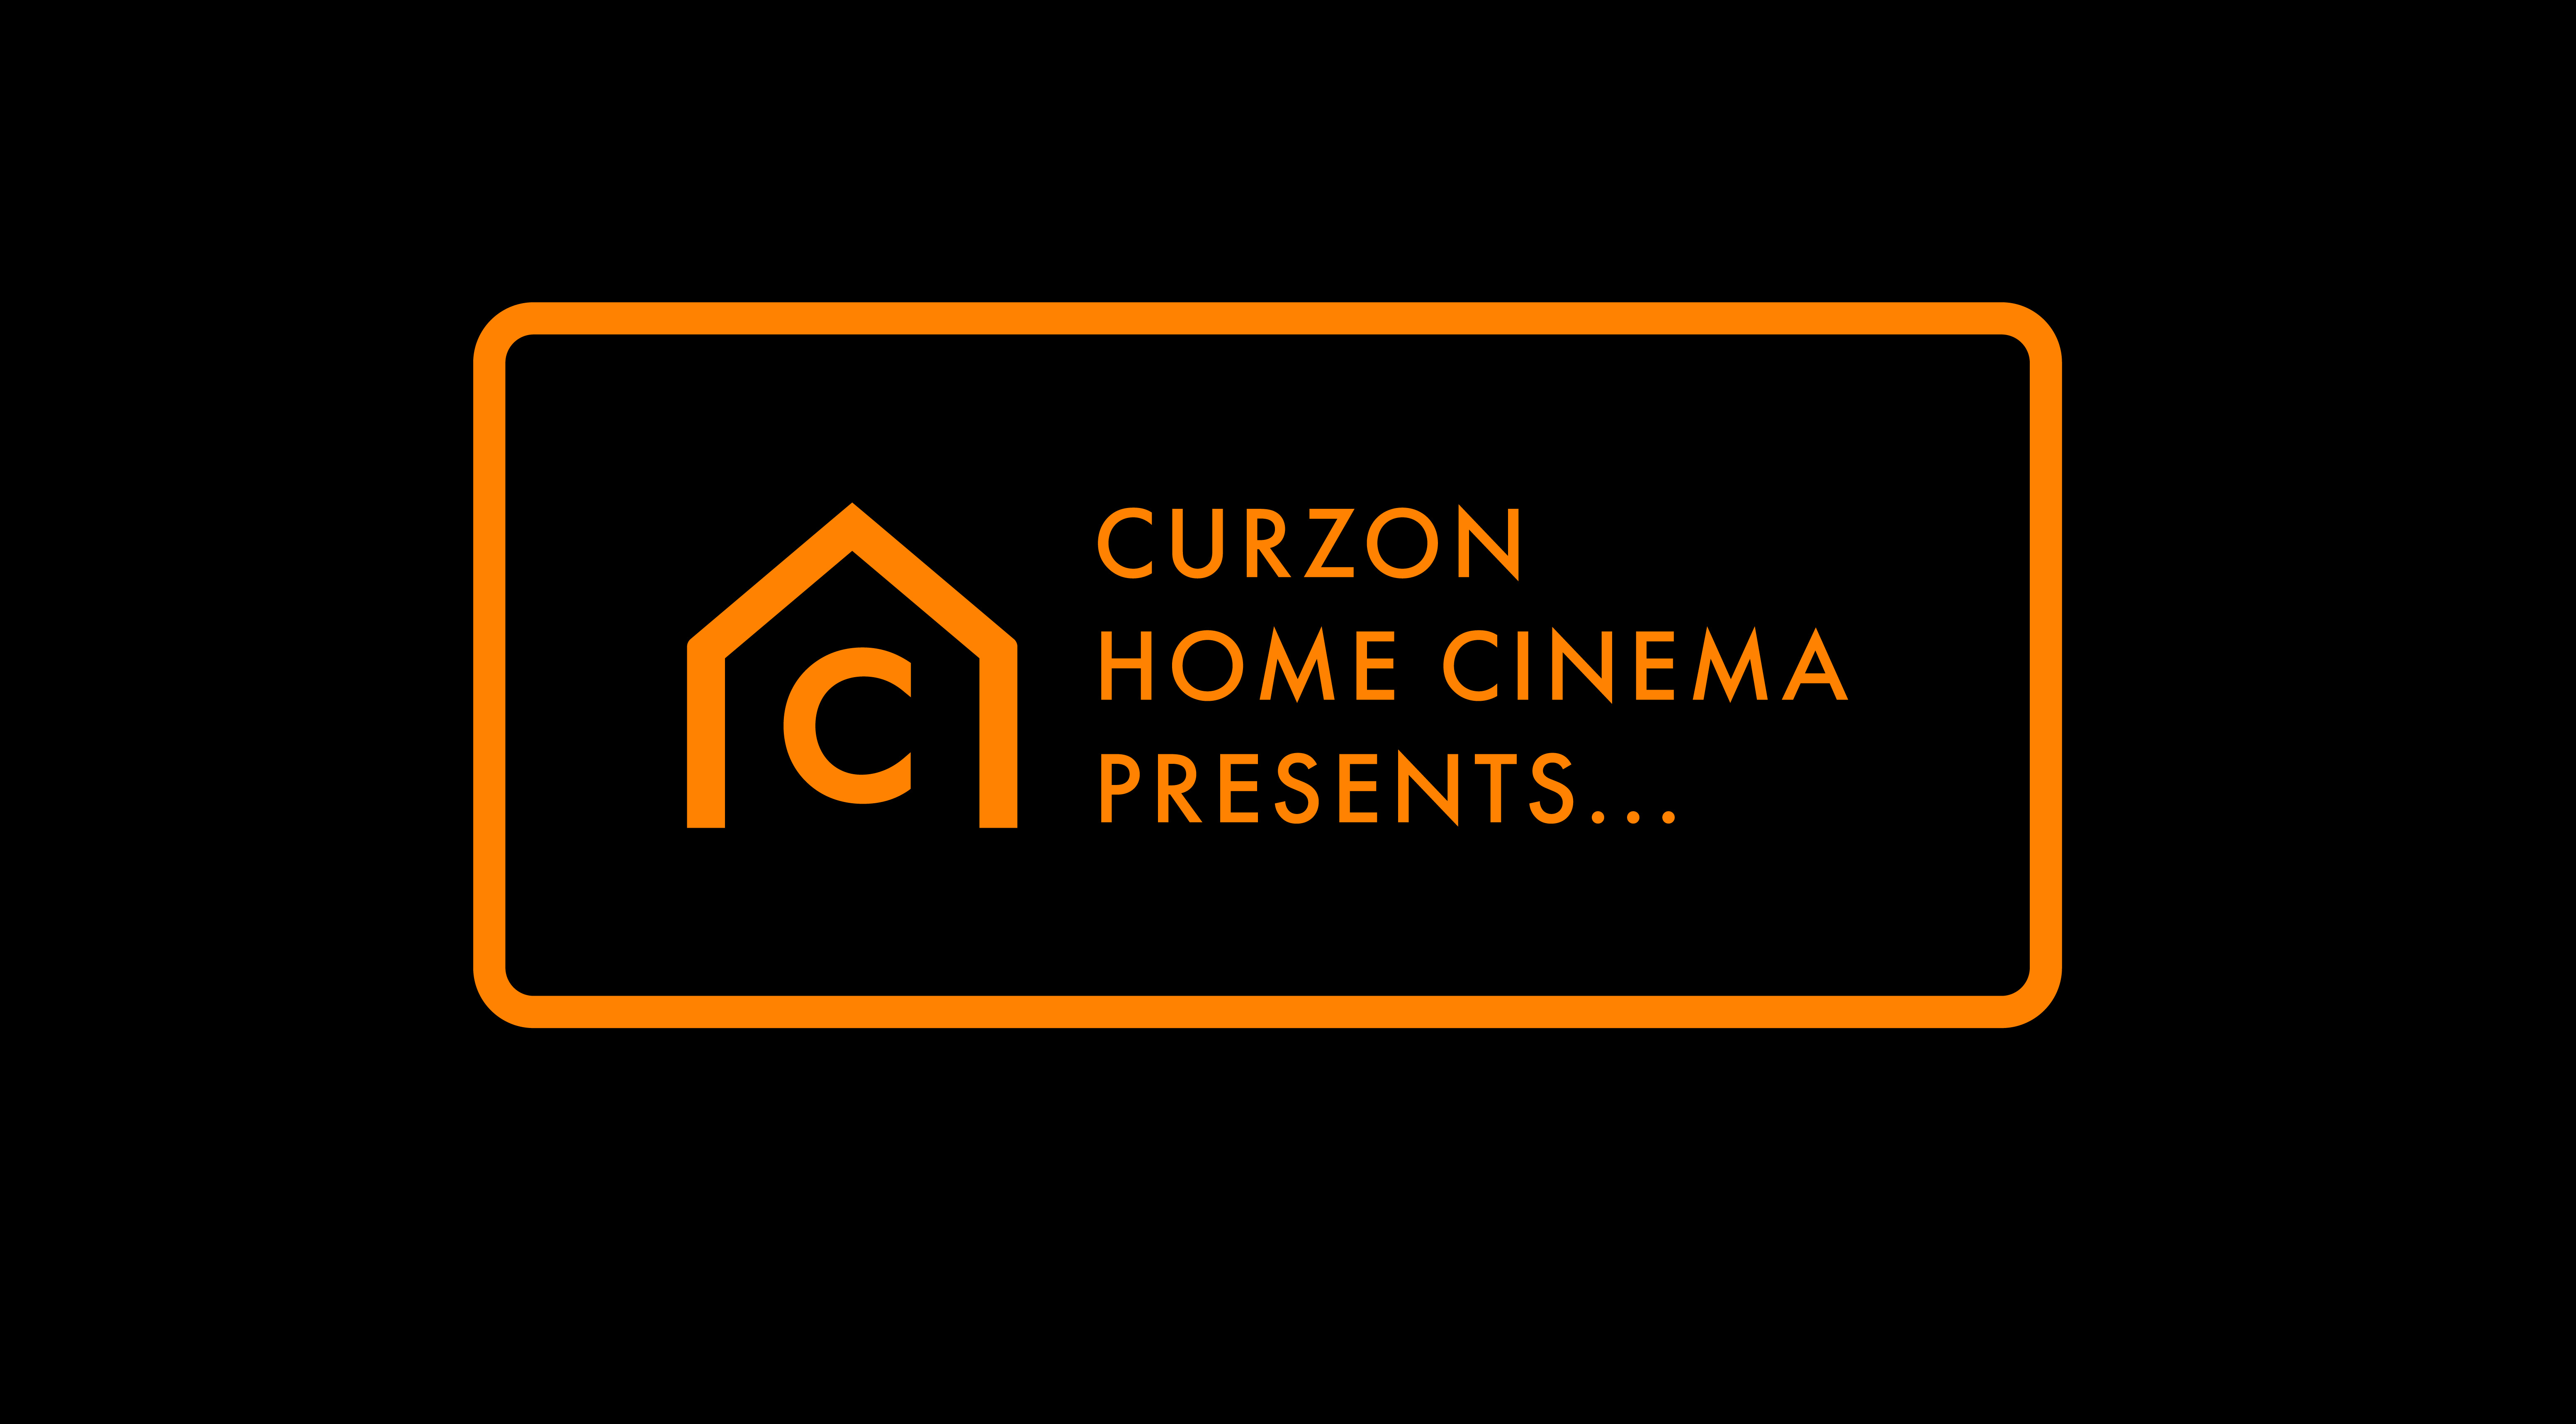 Talk to Me Cinema Tickets & Film Showtimes Curzon